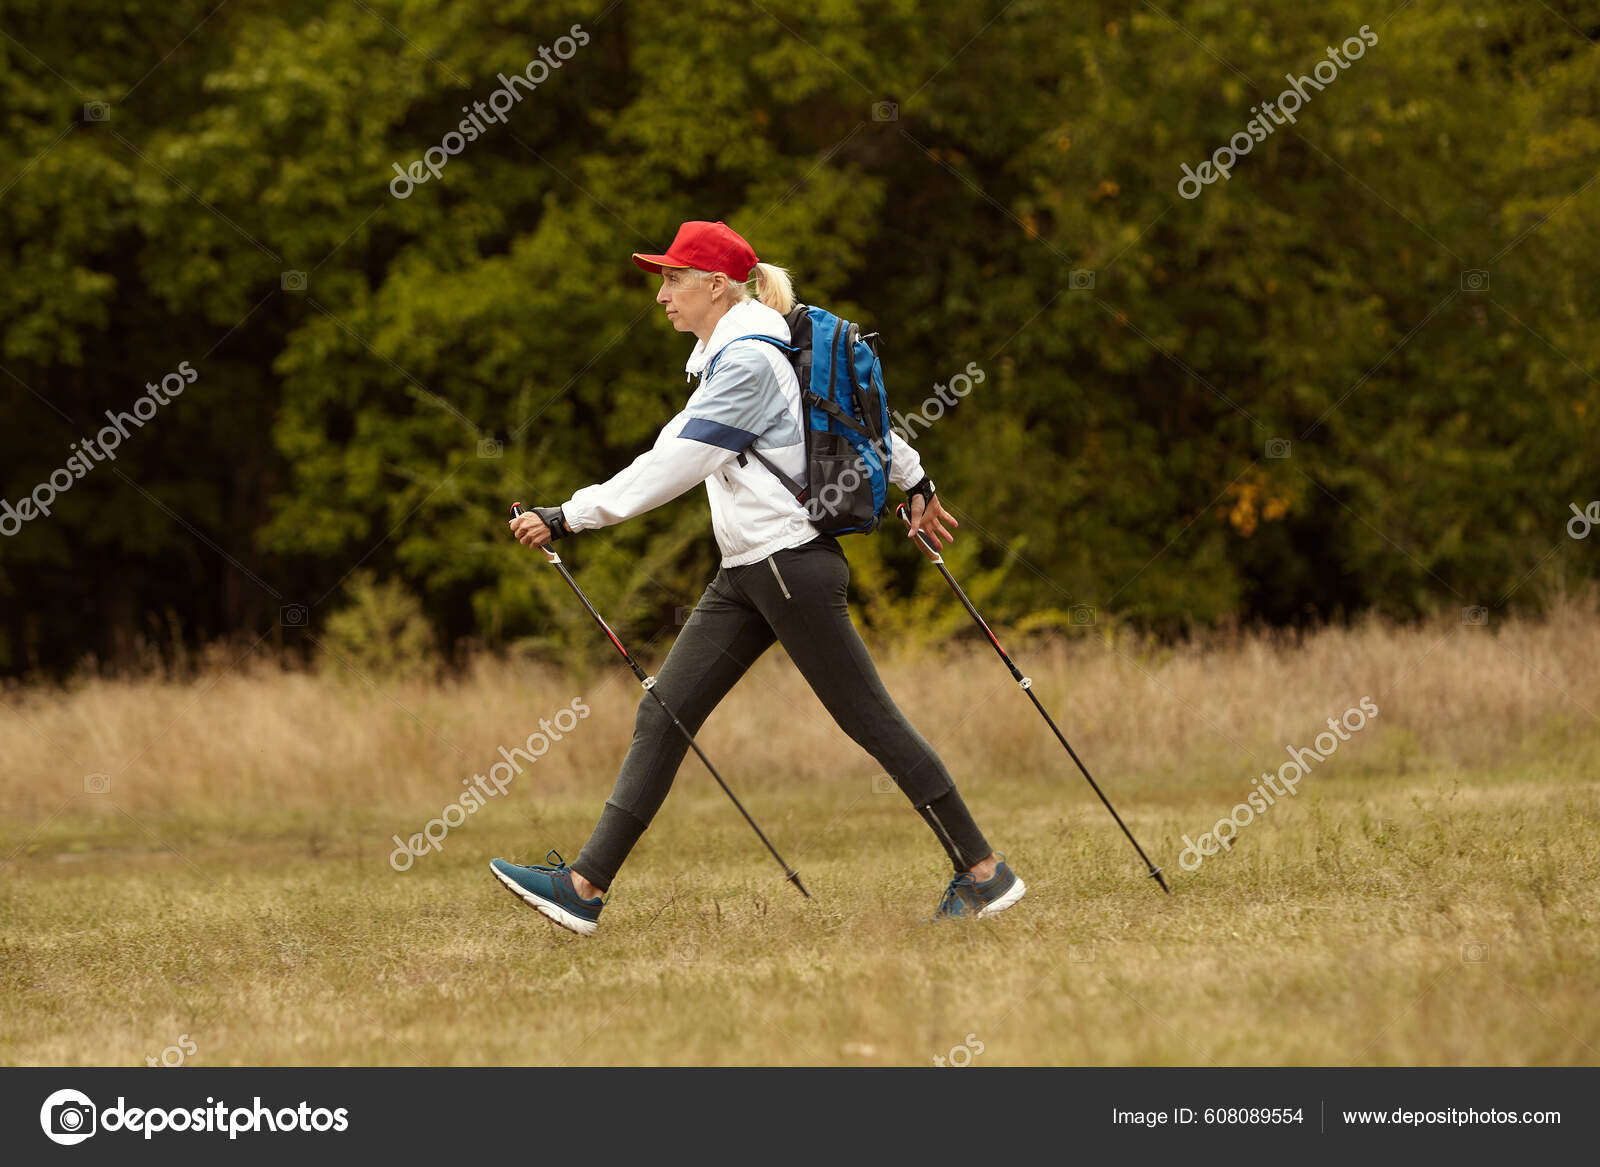 https://st.depositphotos.com/3917667/60808/i/1600/depositphotos_608089554-stock-photo-energy-active-sportive-elderly-woman.jpg